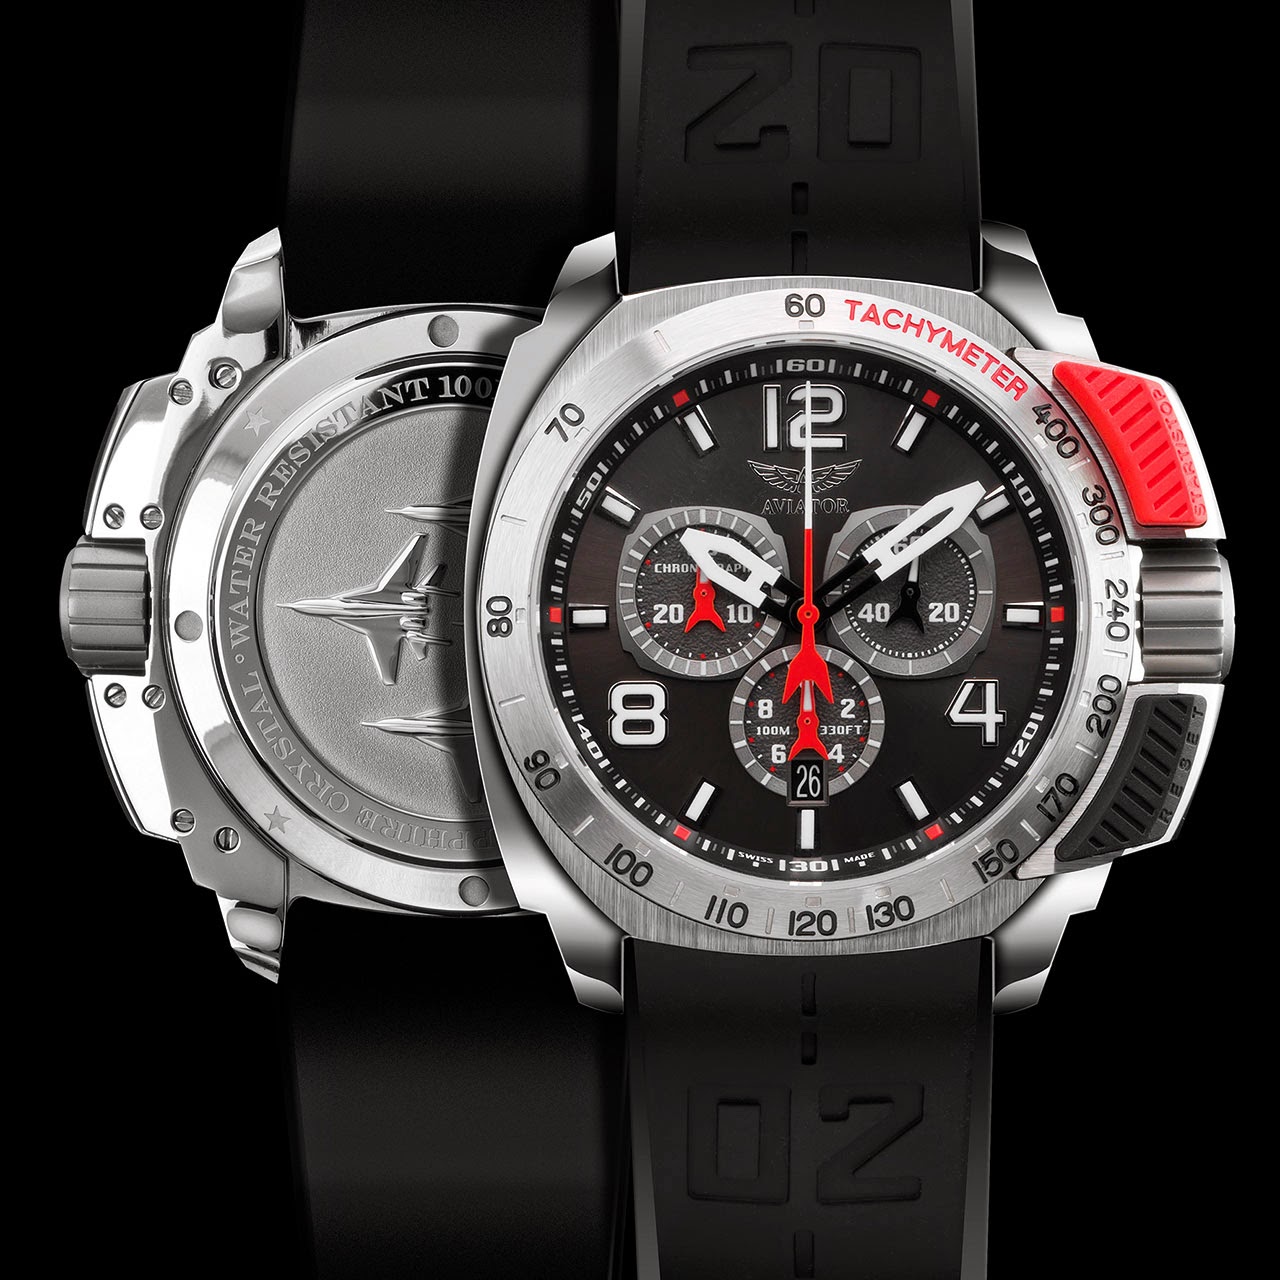 Aviator Professional Edition Chronograph Watch